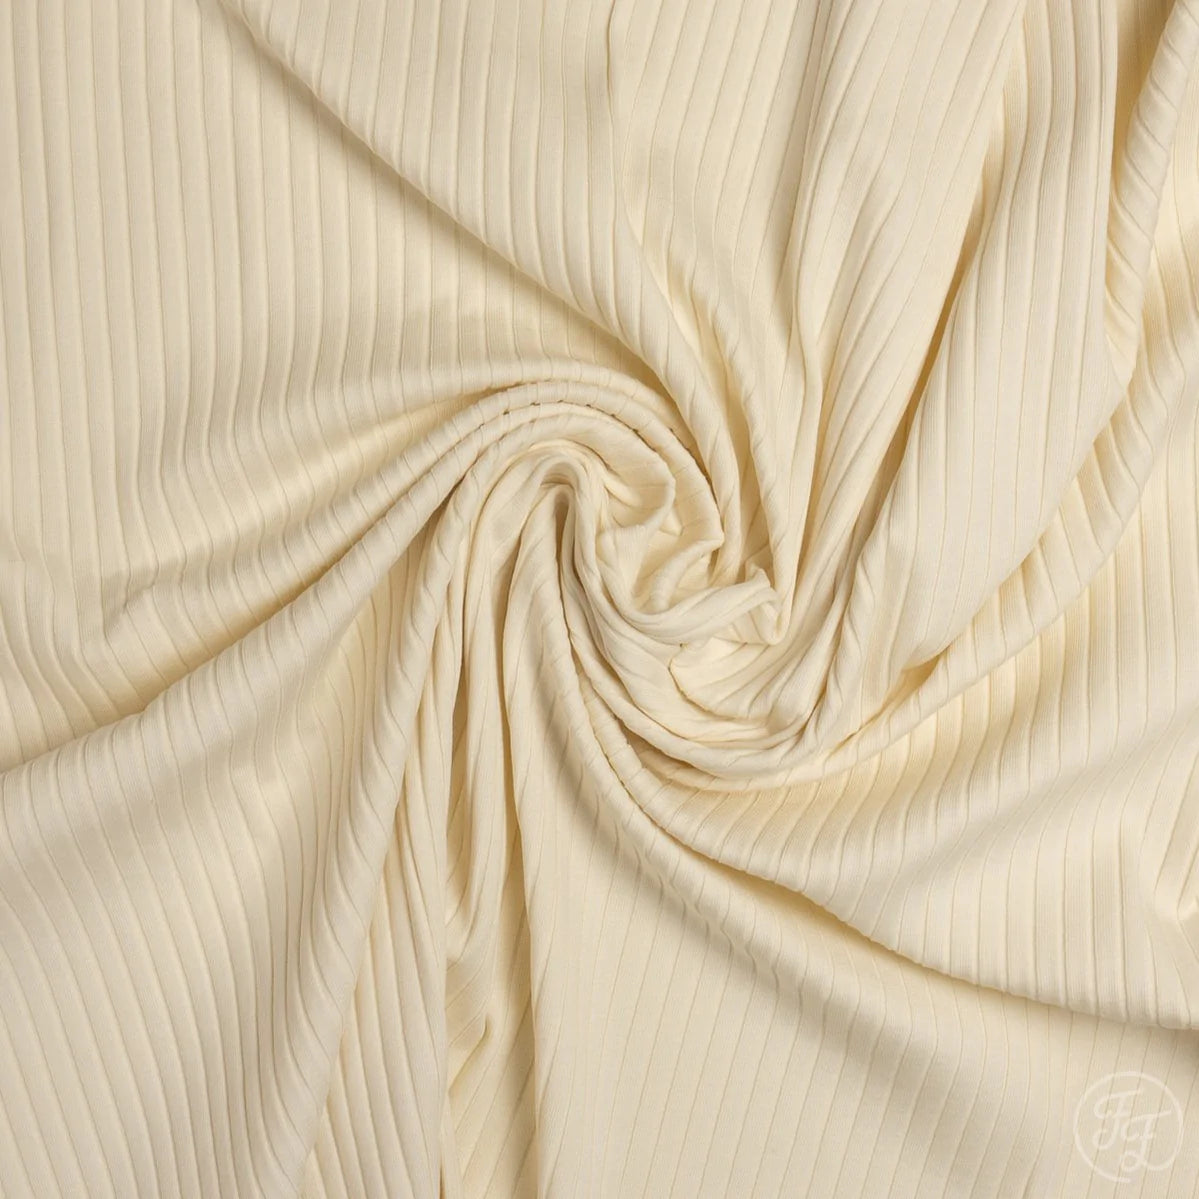 Marshmallow 8 x 4 Cotton Sweater Rib Knit